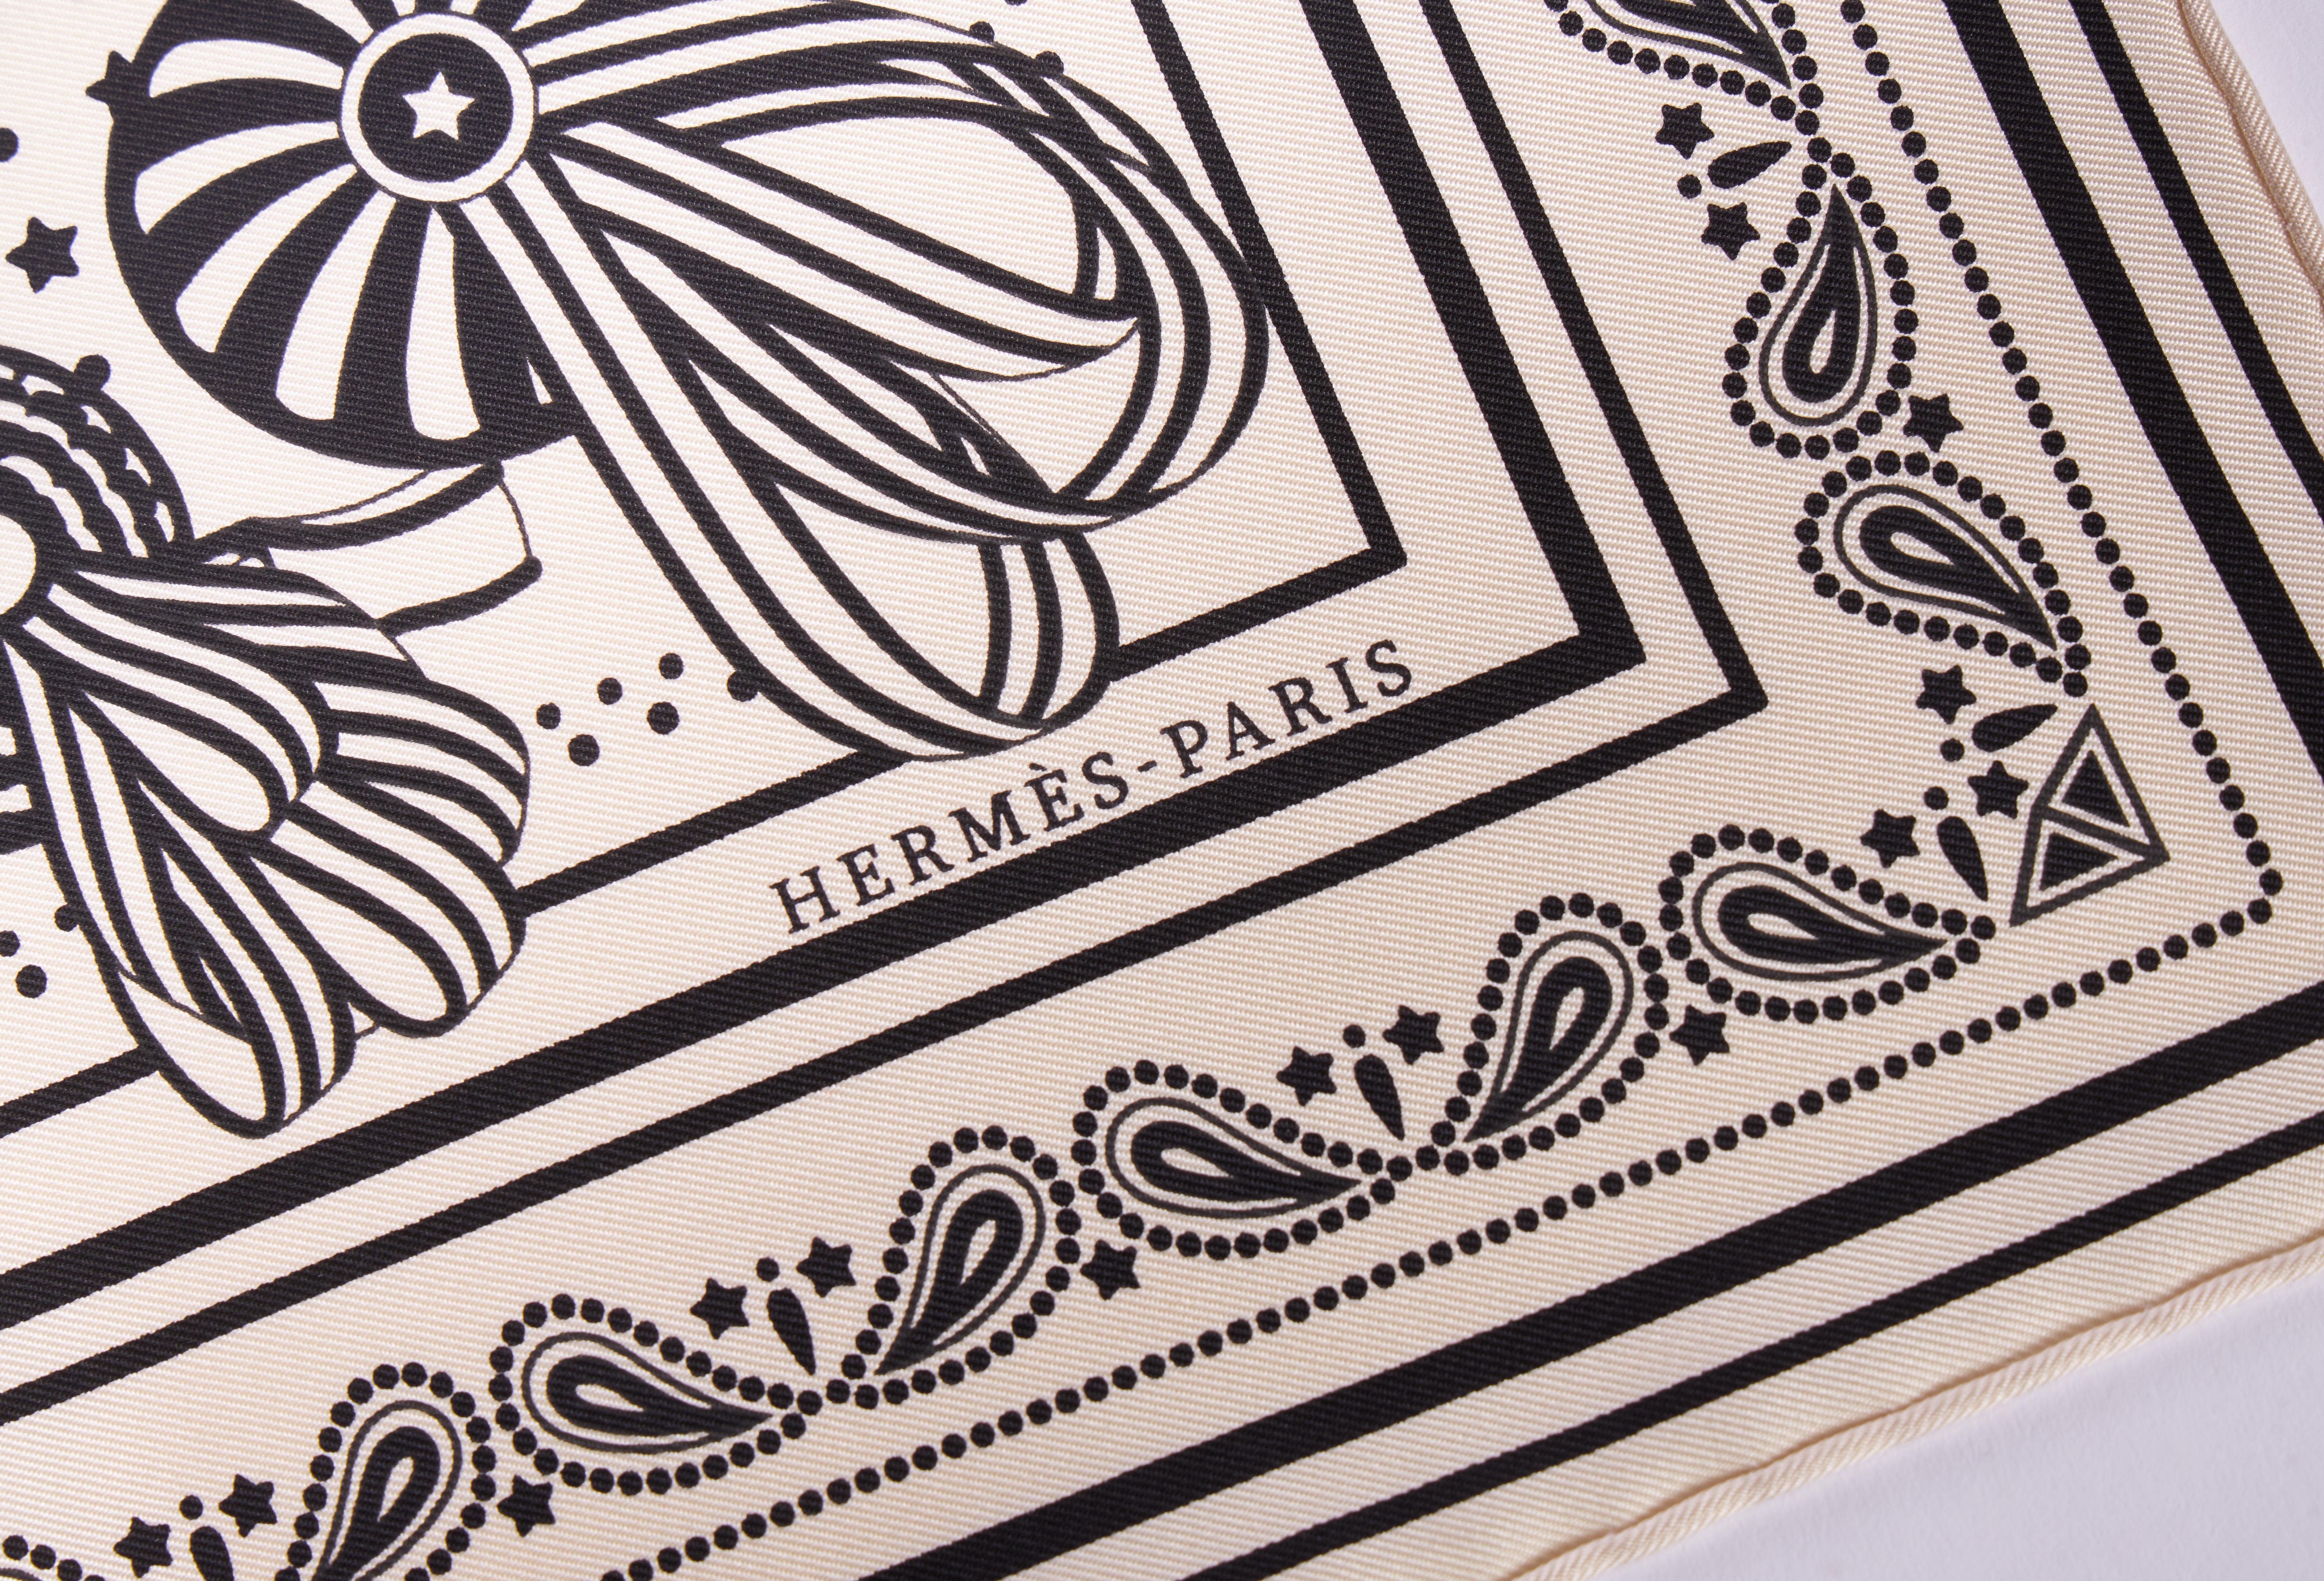 Hermès 2020 limited edition Rubans bandana scarf. Black and white combo. 100% pure silk. Brand new in original box.